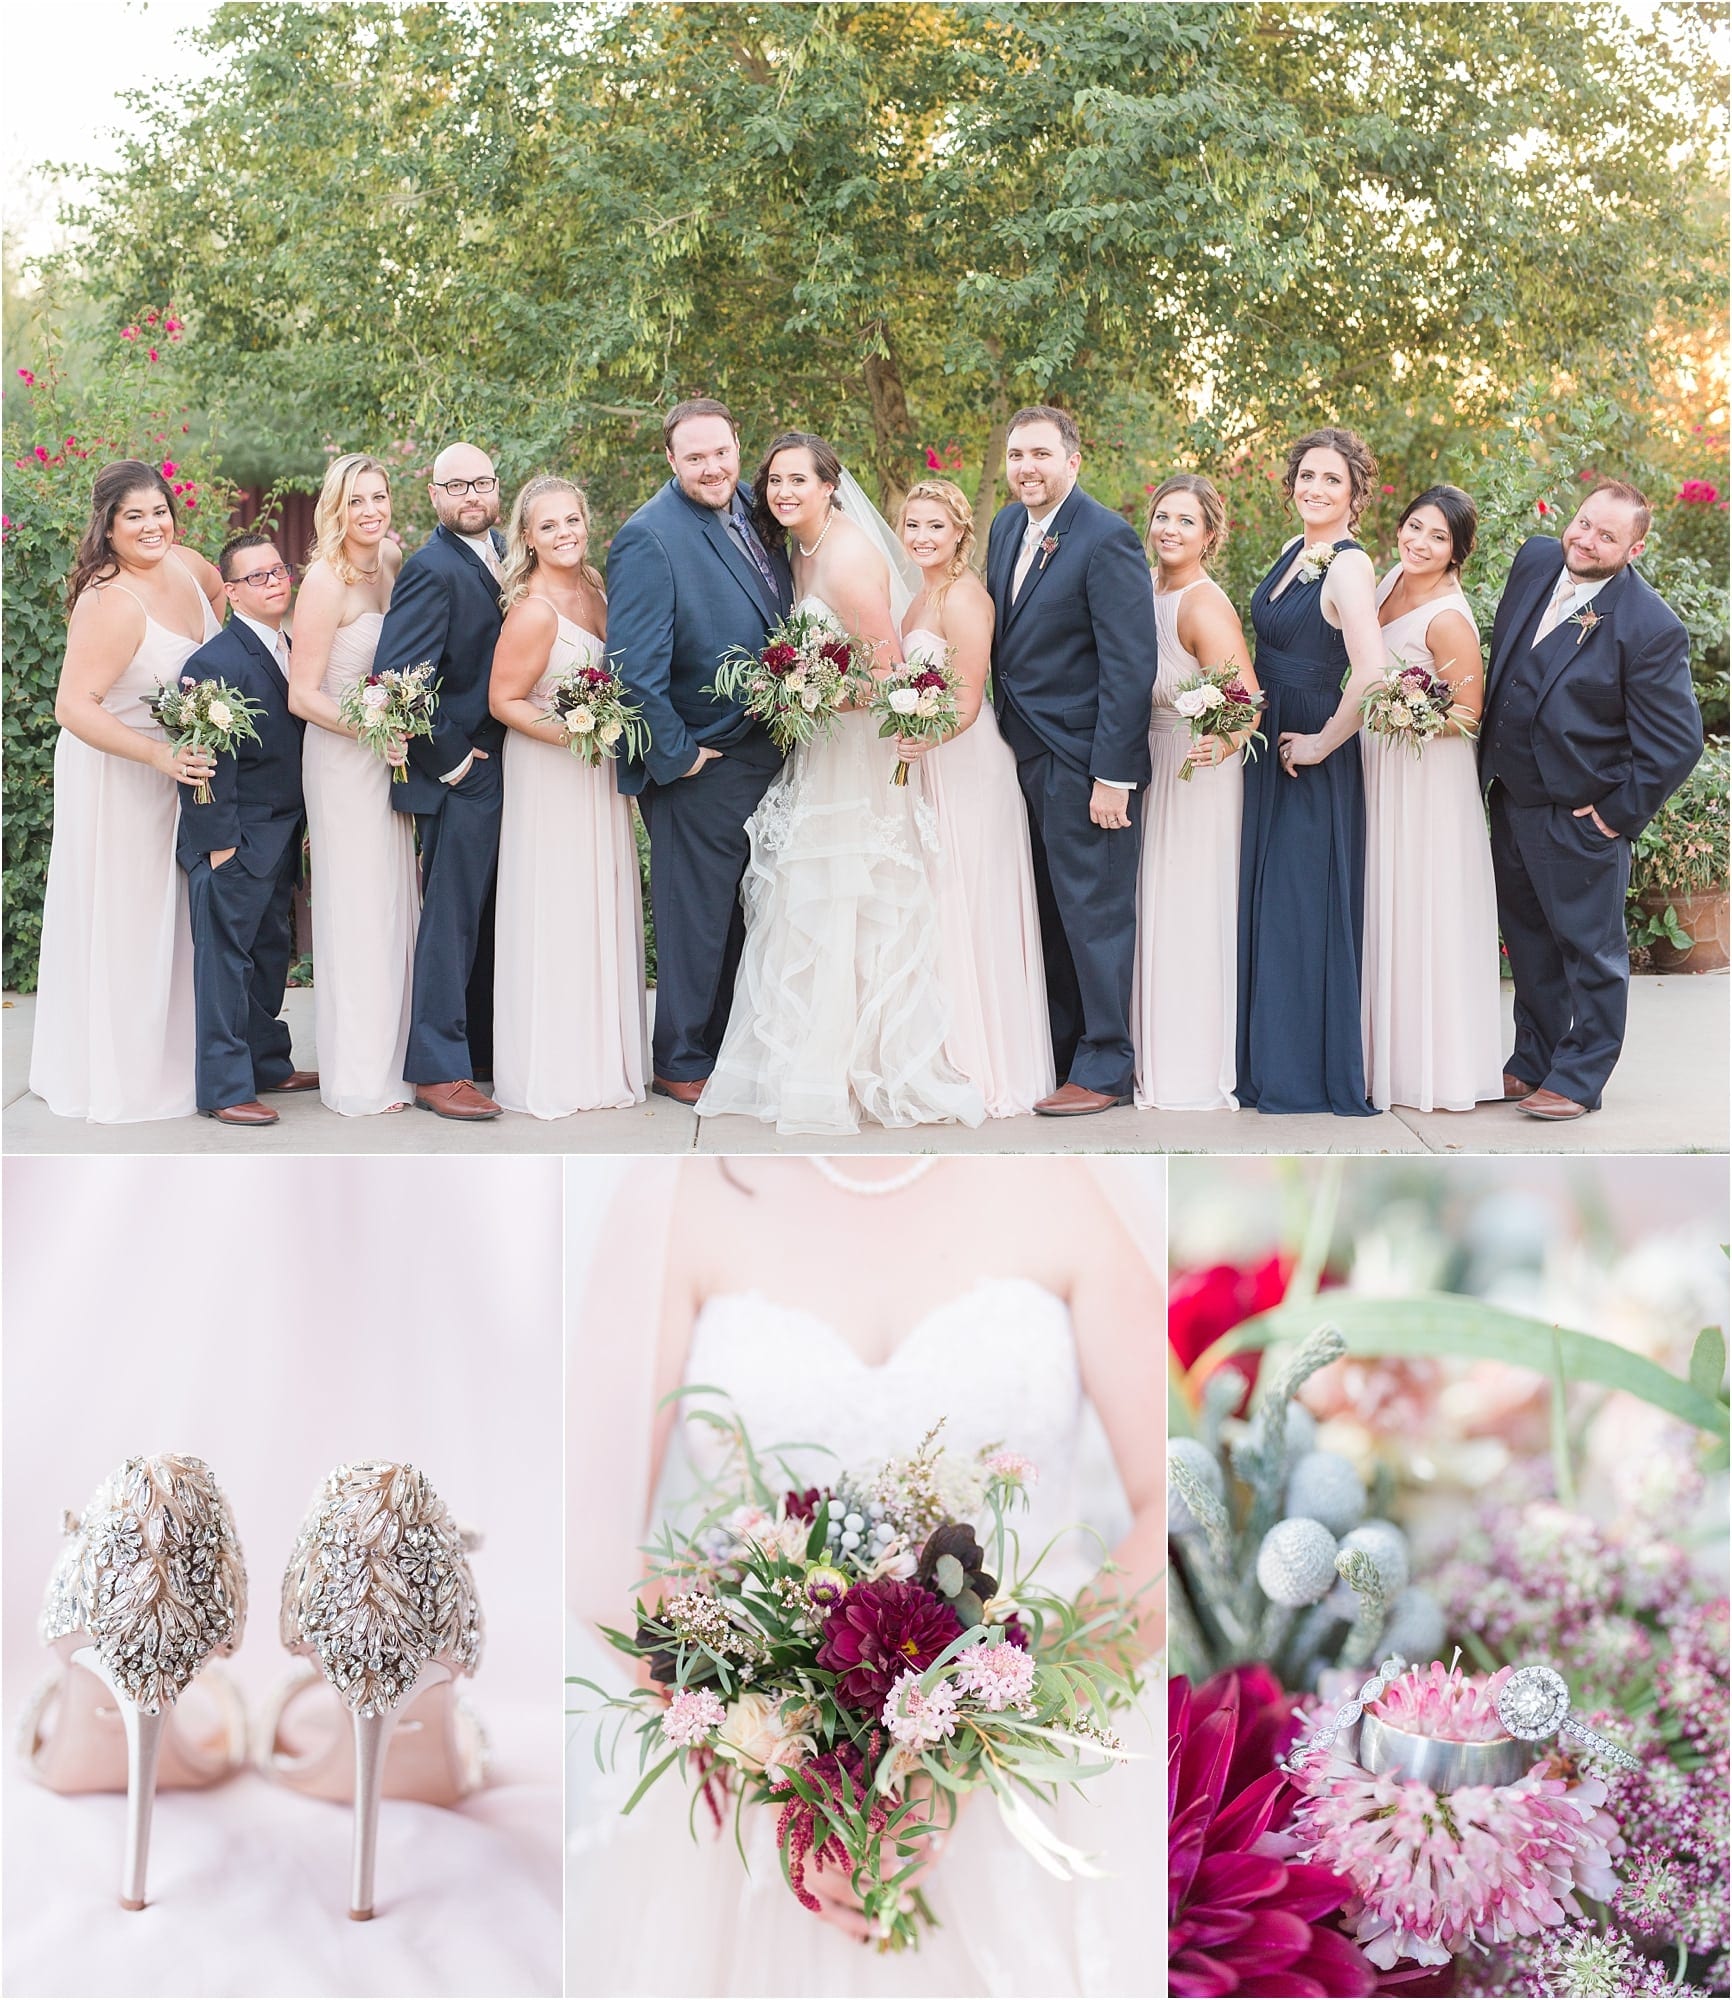 Wedding Party, Wedding Shoes, Wedding Bouquet, Wedding Rings